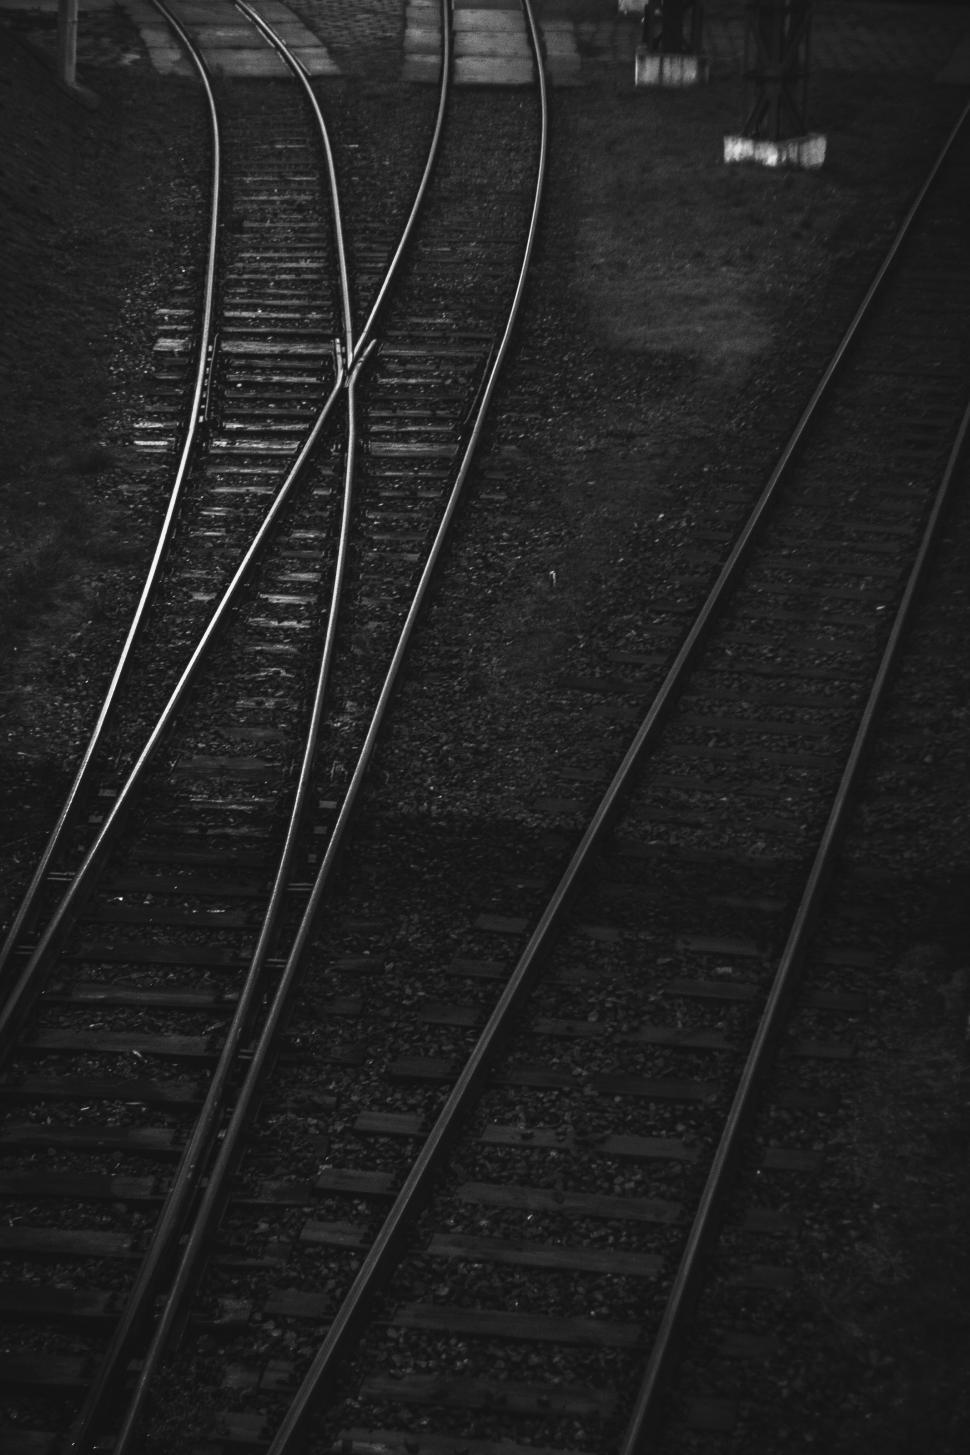 Free Image of Black and White Photo of Train Tracks 